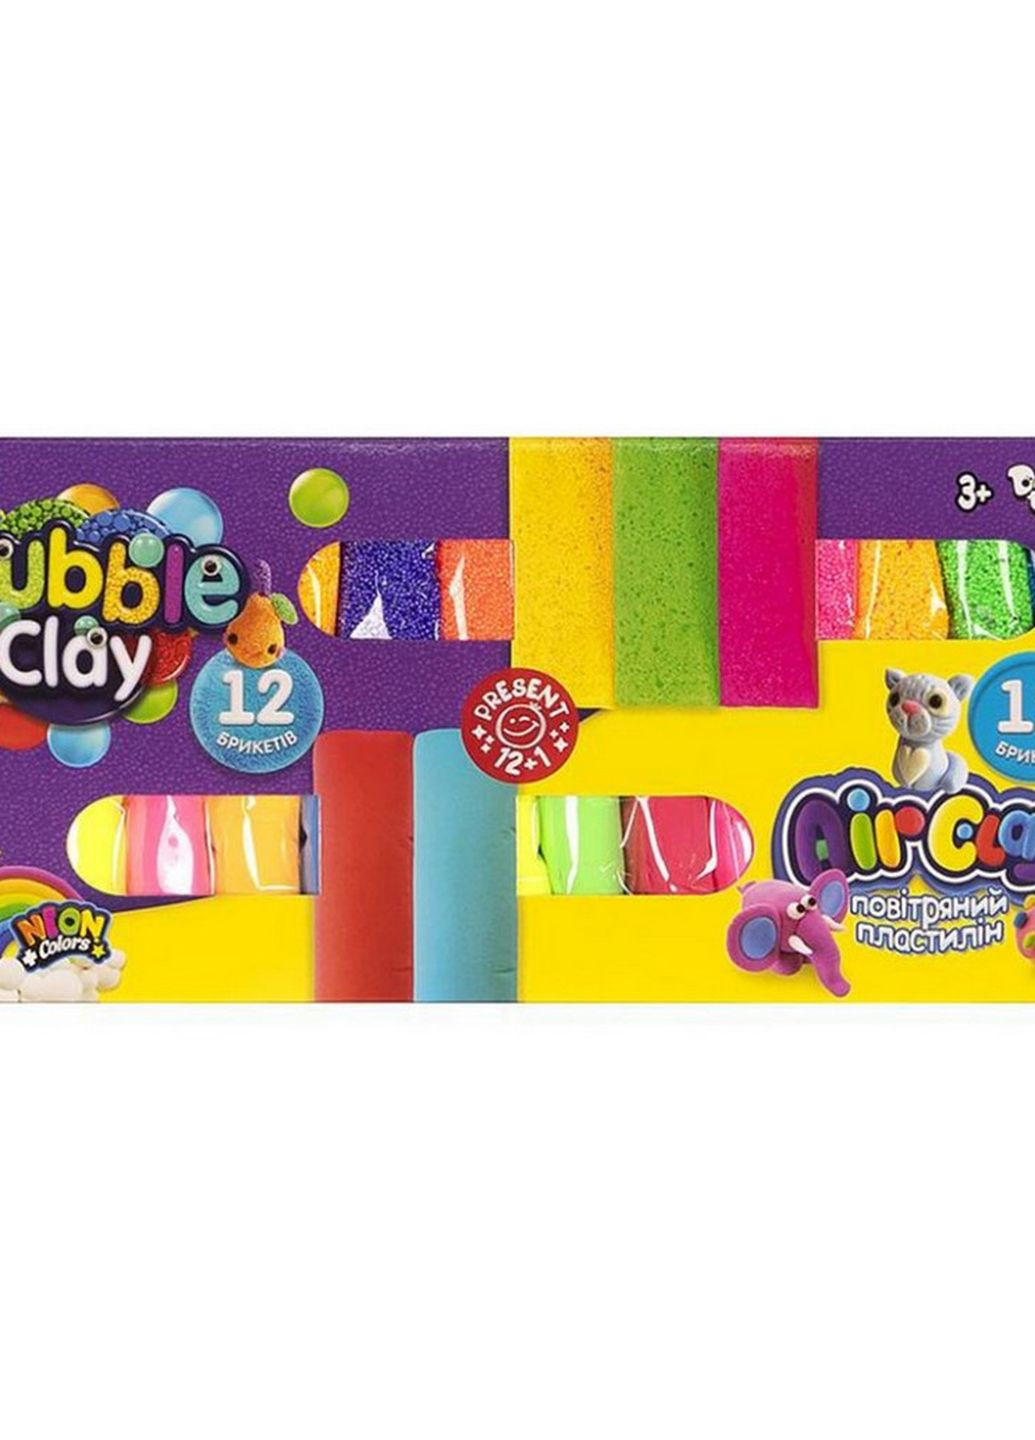 Комплект креативного творчества "Air Clay+Bubble Clay" ARBB-02-01U неоновый цвет Danko Toys (266700035)